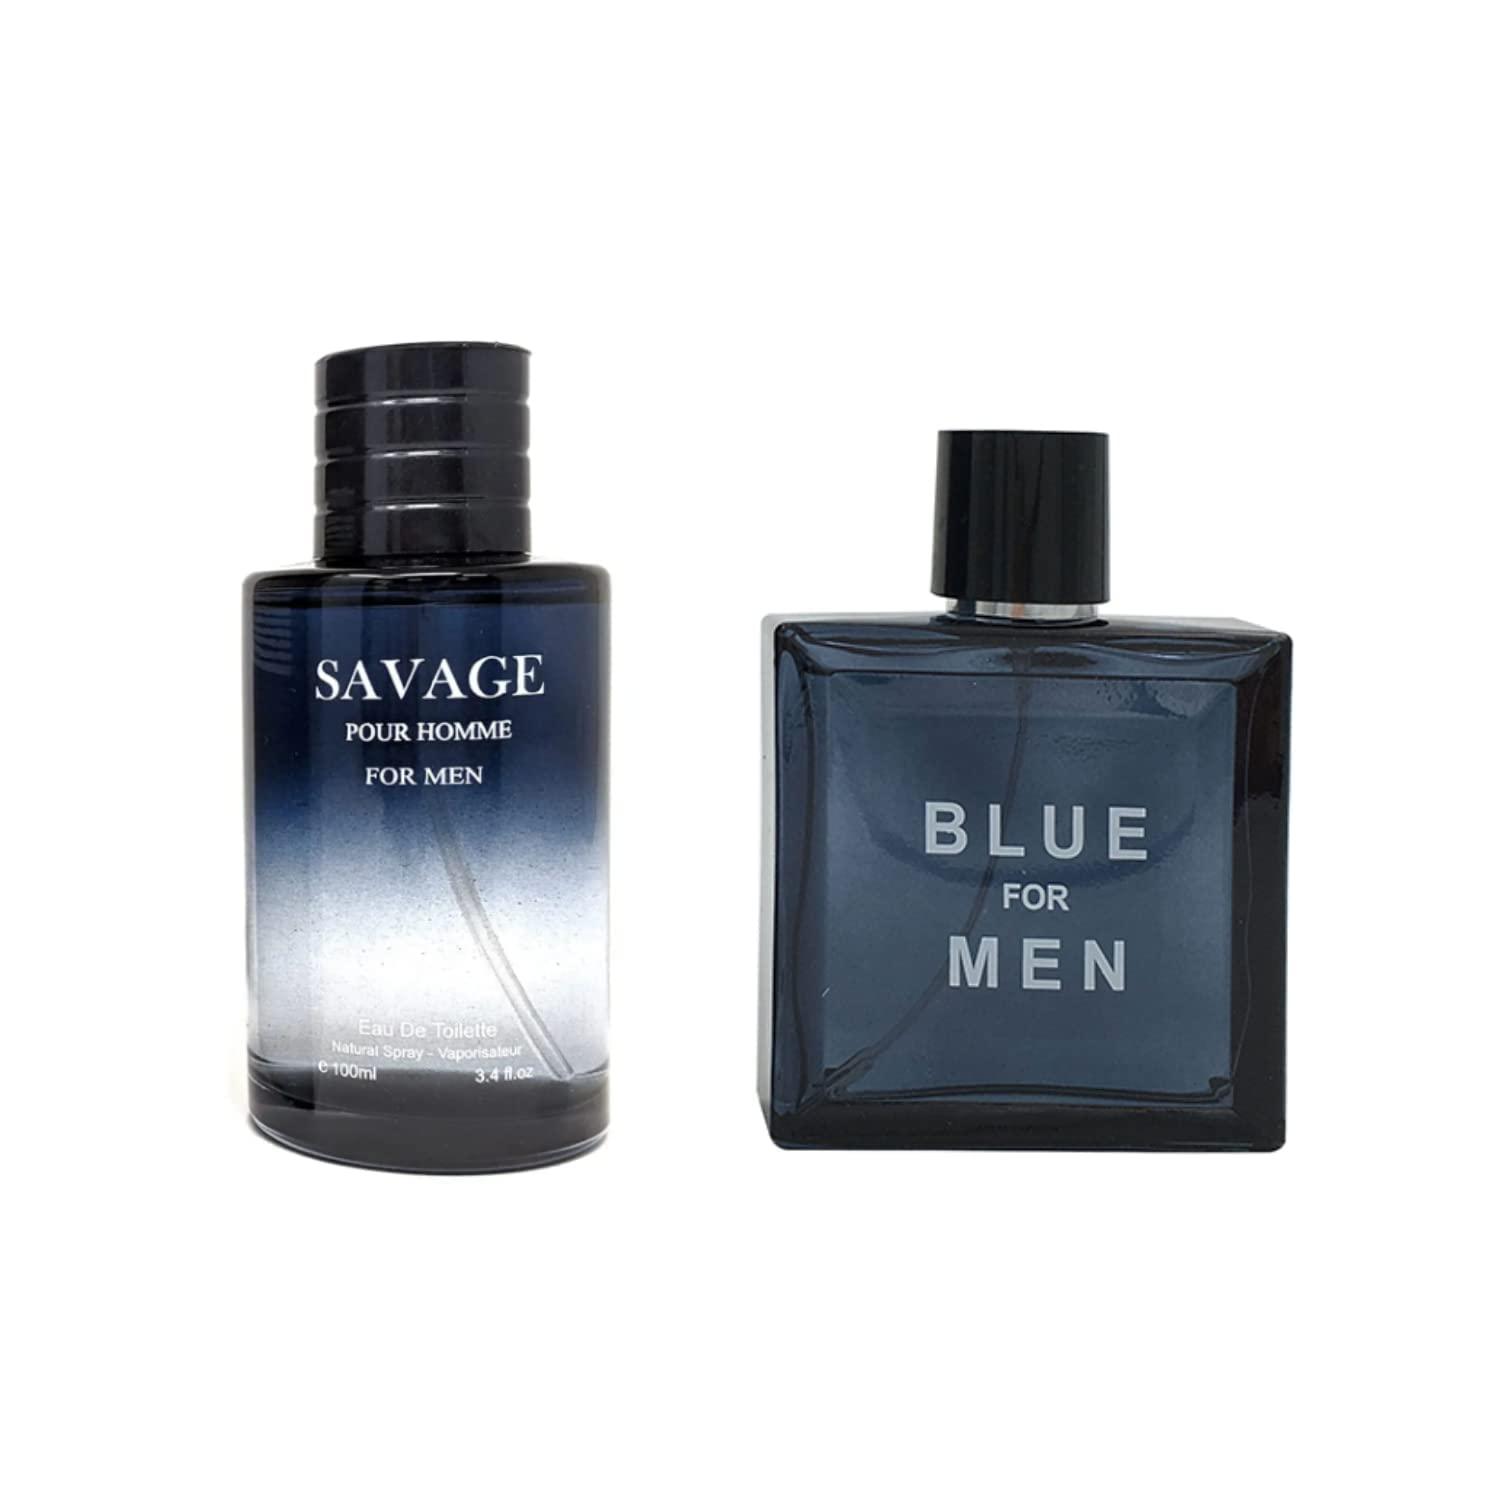 INSPIRE SCENTS Savage Pour Homme & Blue for Men Cologne Combo Set, Eau De  Toilette Natural Spray Fragrance for Men, Wonderful Gift, Masculine Scent  for All Skin Types, 3.4 Fl Oz Each (